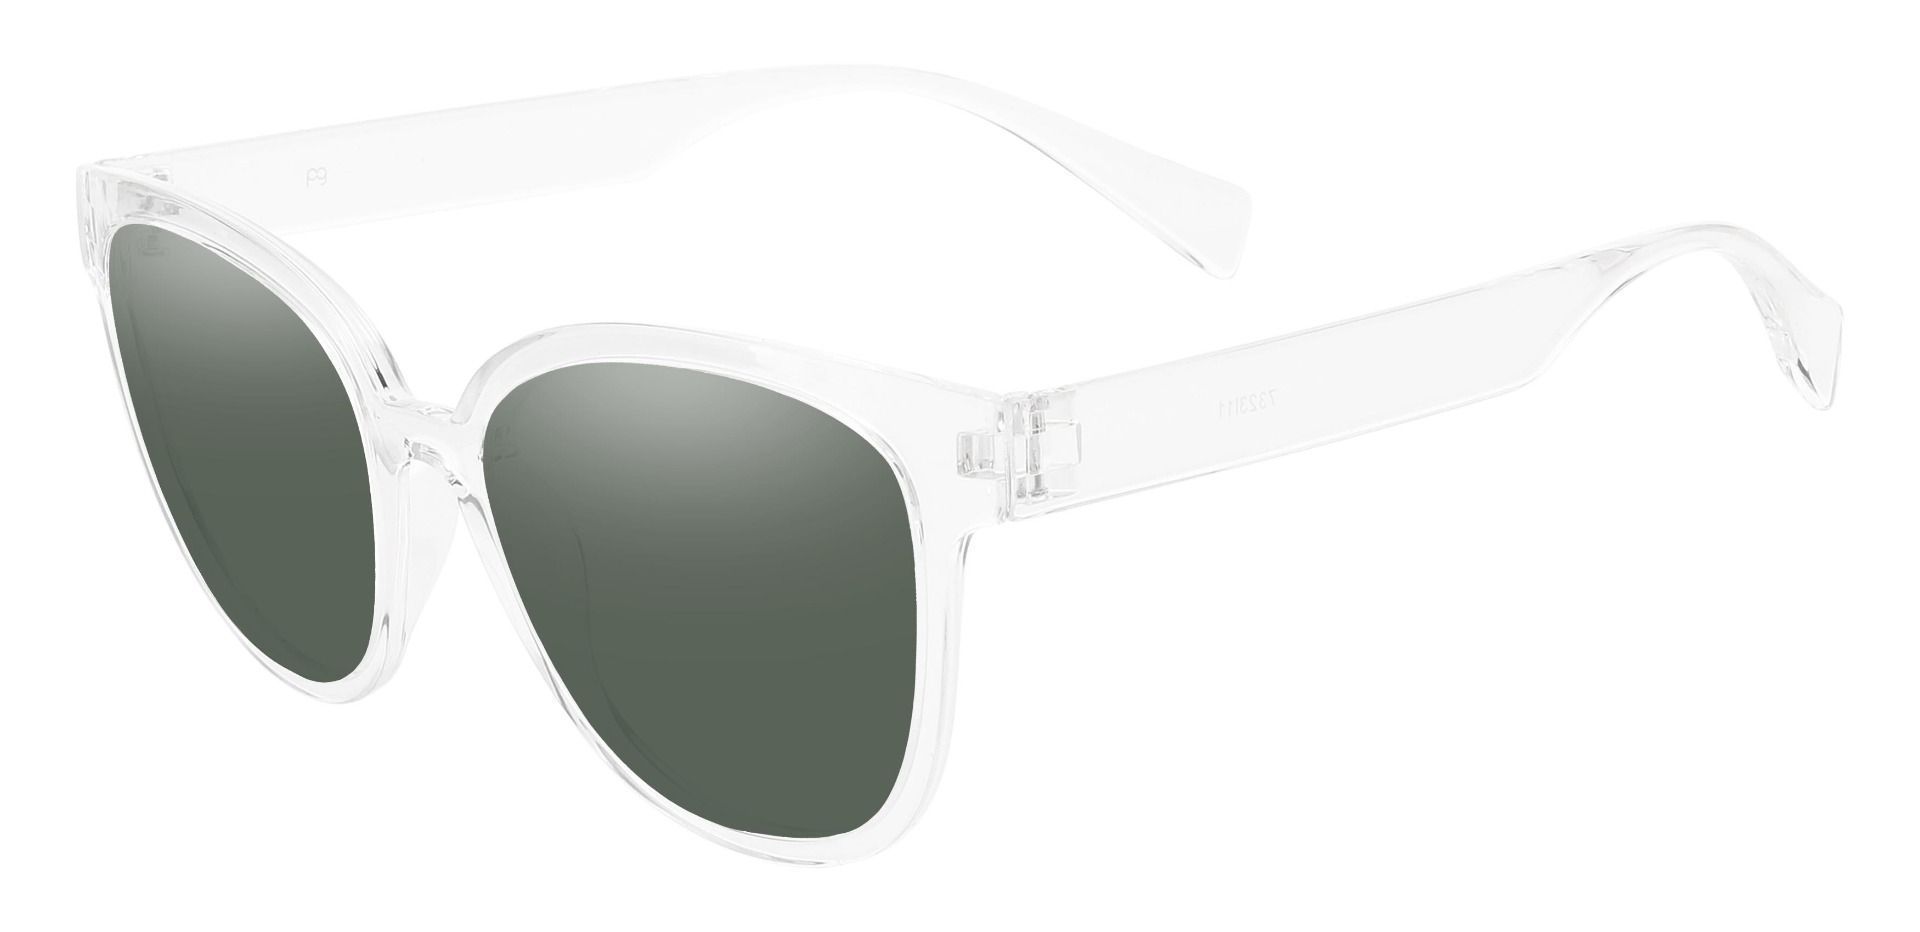 Maddock Square Progressive Sunglasses - Pink Frame With Green Lenses